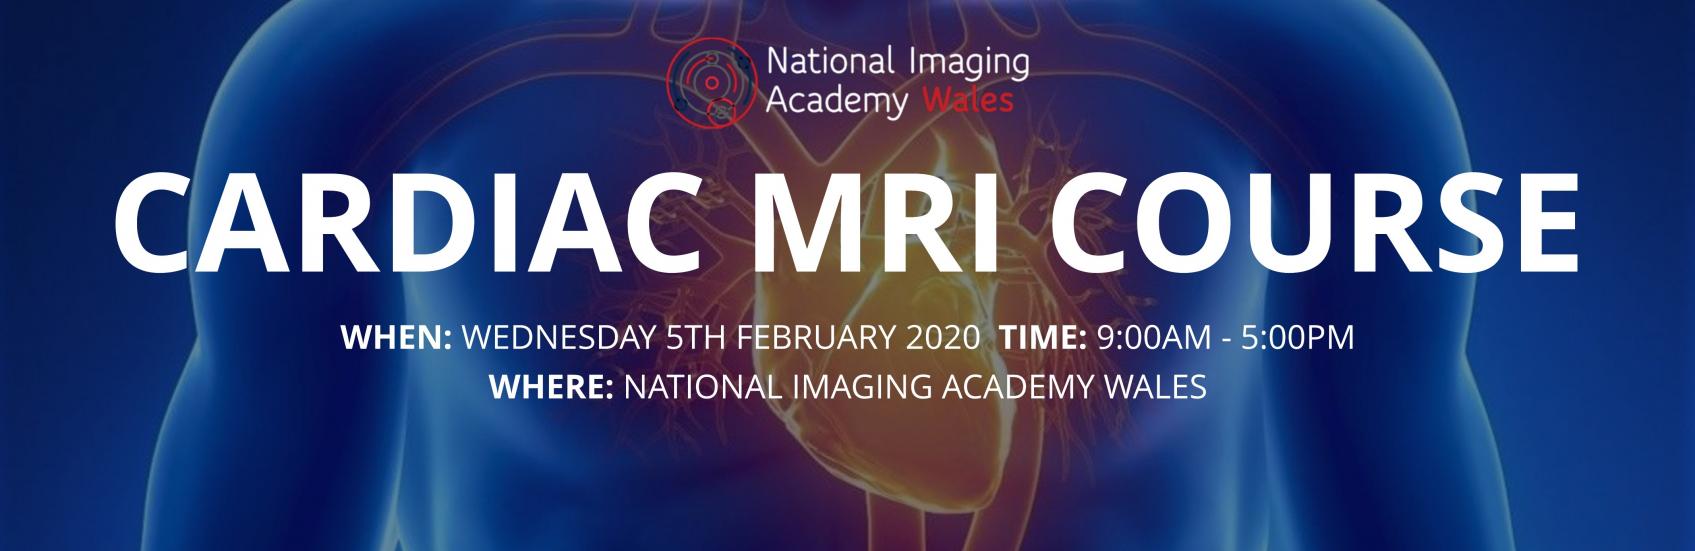 Cardiac MRI Course Poster